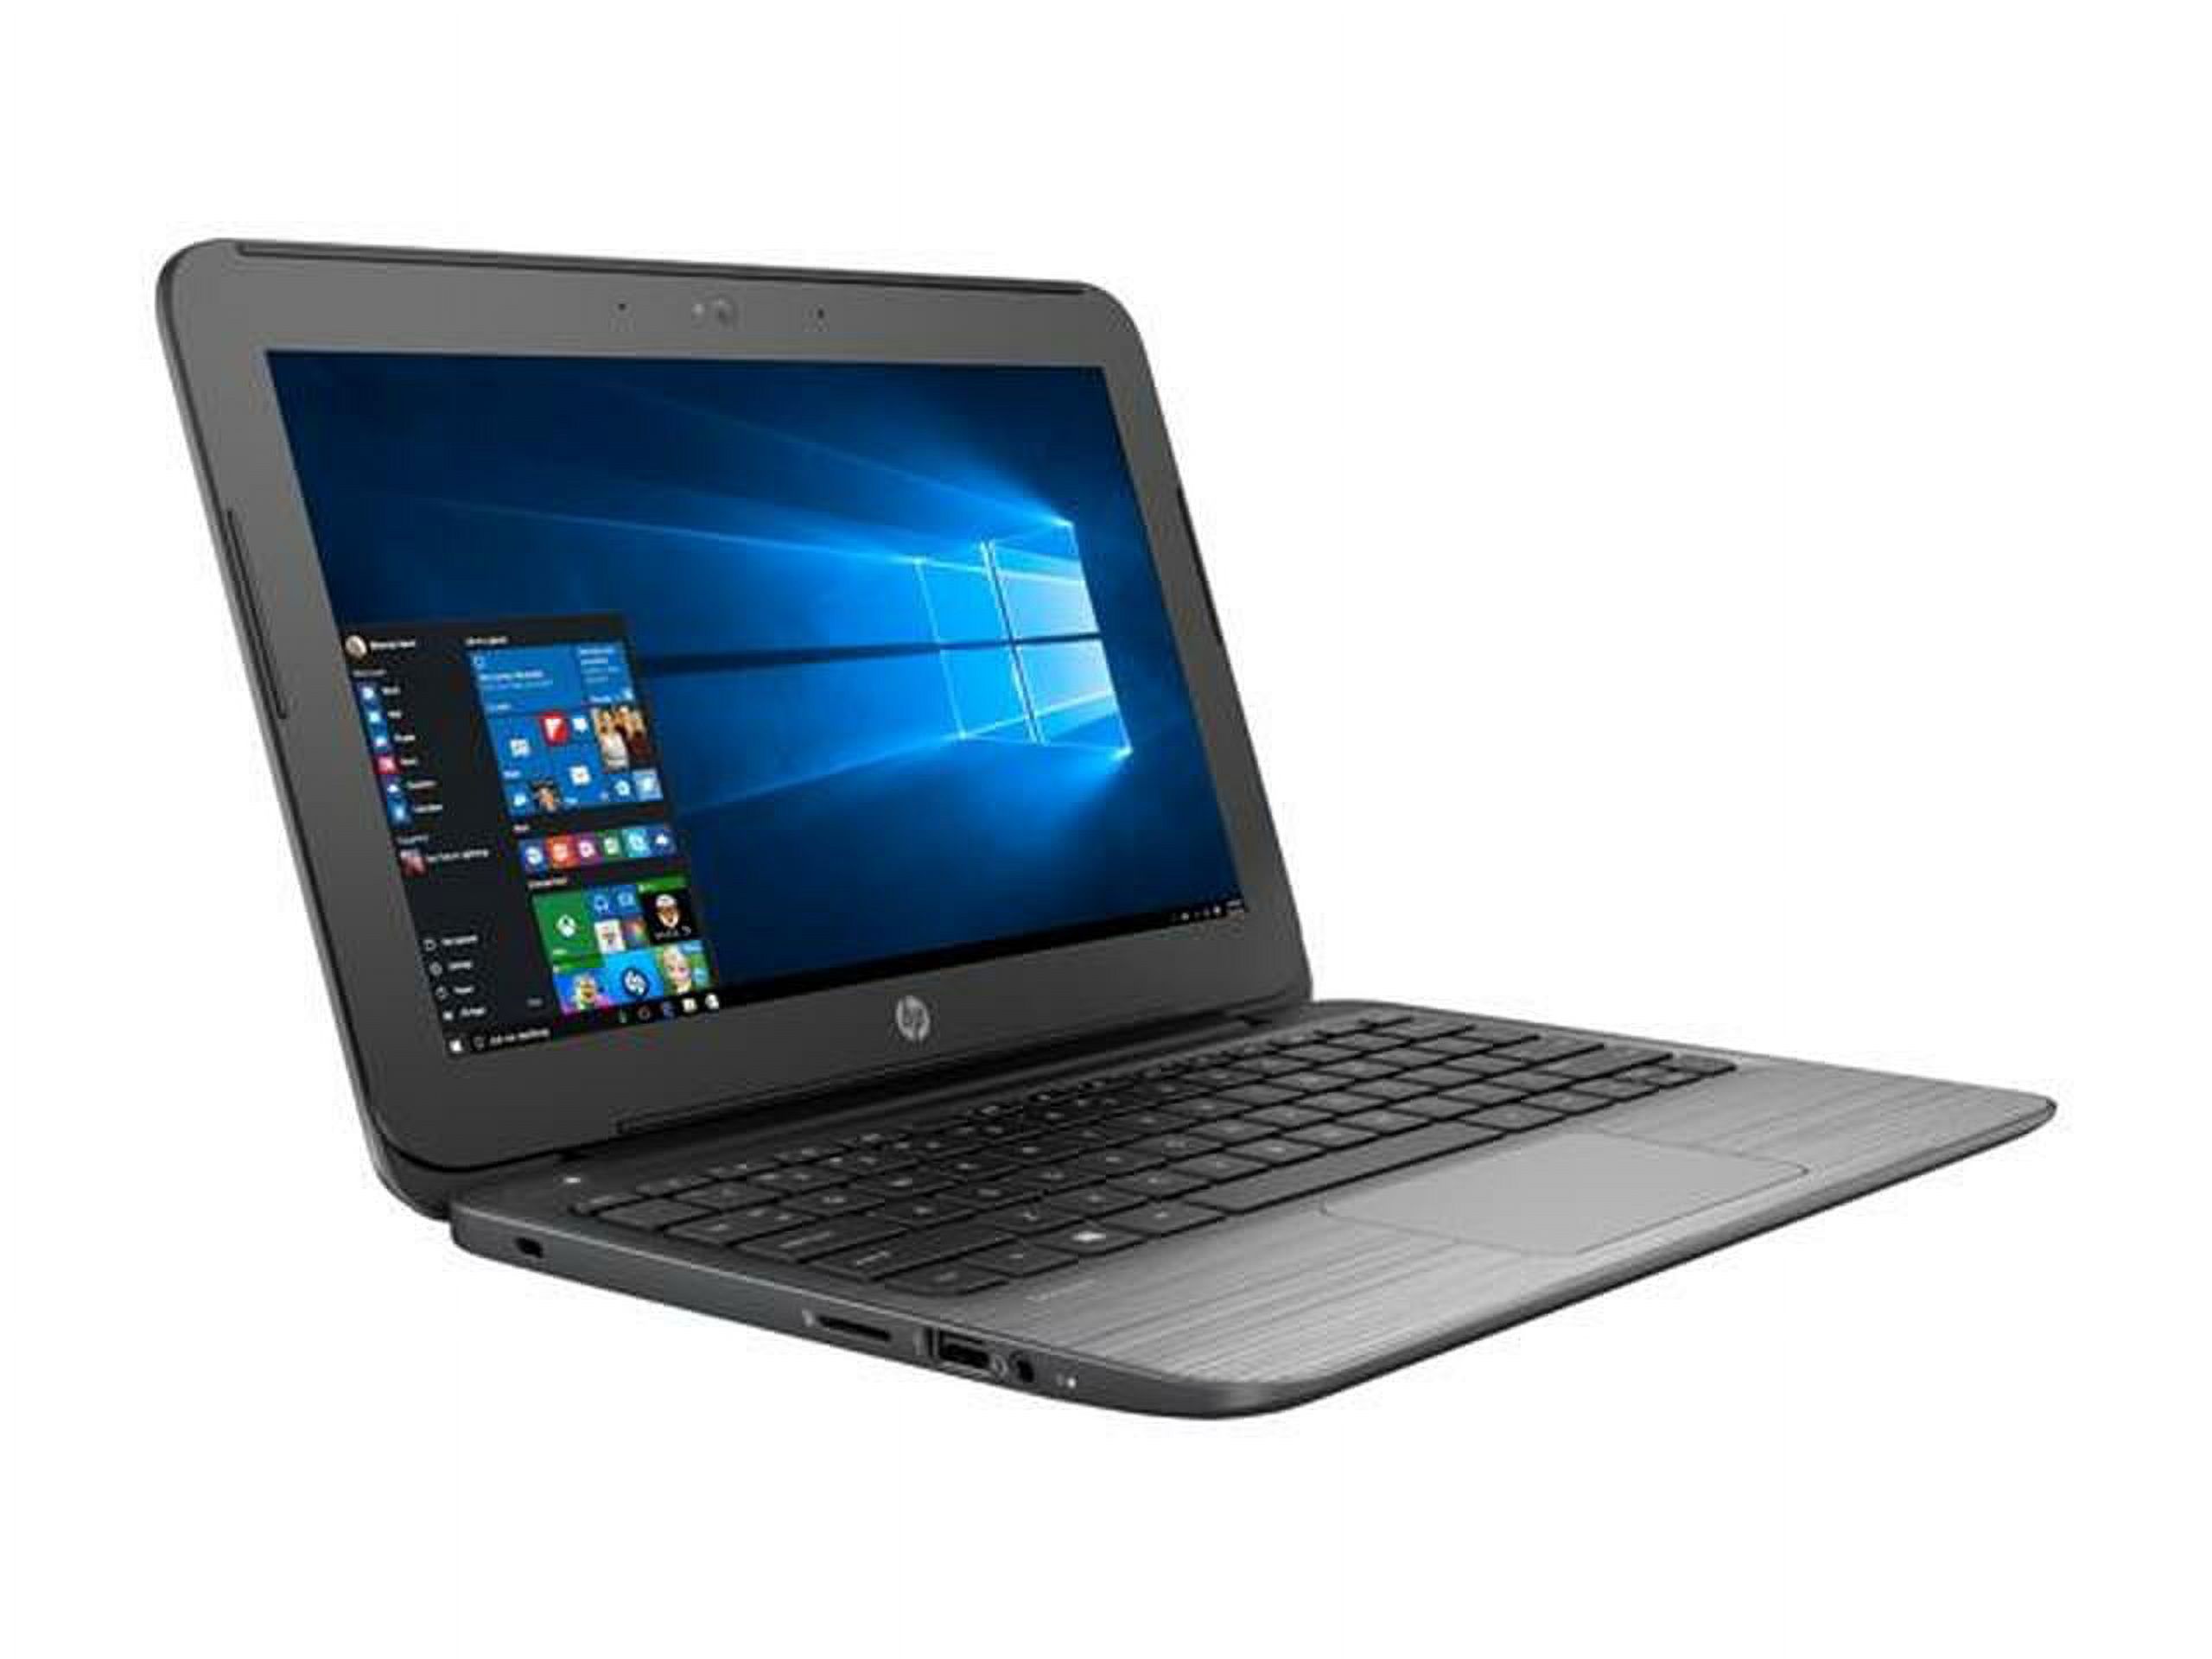 Pre-Owned HP Stream 11 Pro G2 11.6" Laptop Intel N3050 1.60GHz 4GB 64GB eMMC SSD Windows 10 Pro (Refurbished: Good) - image 2 of 4